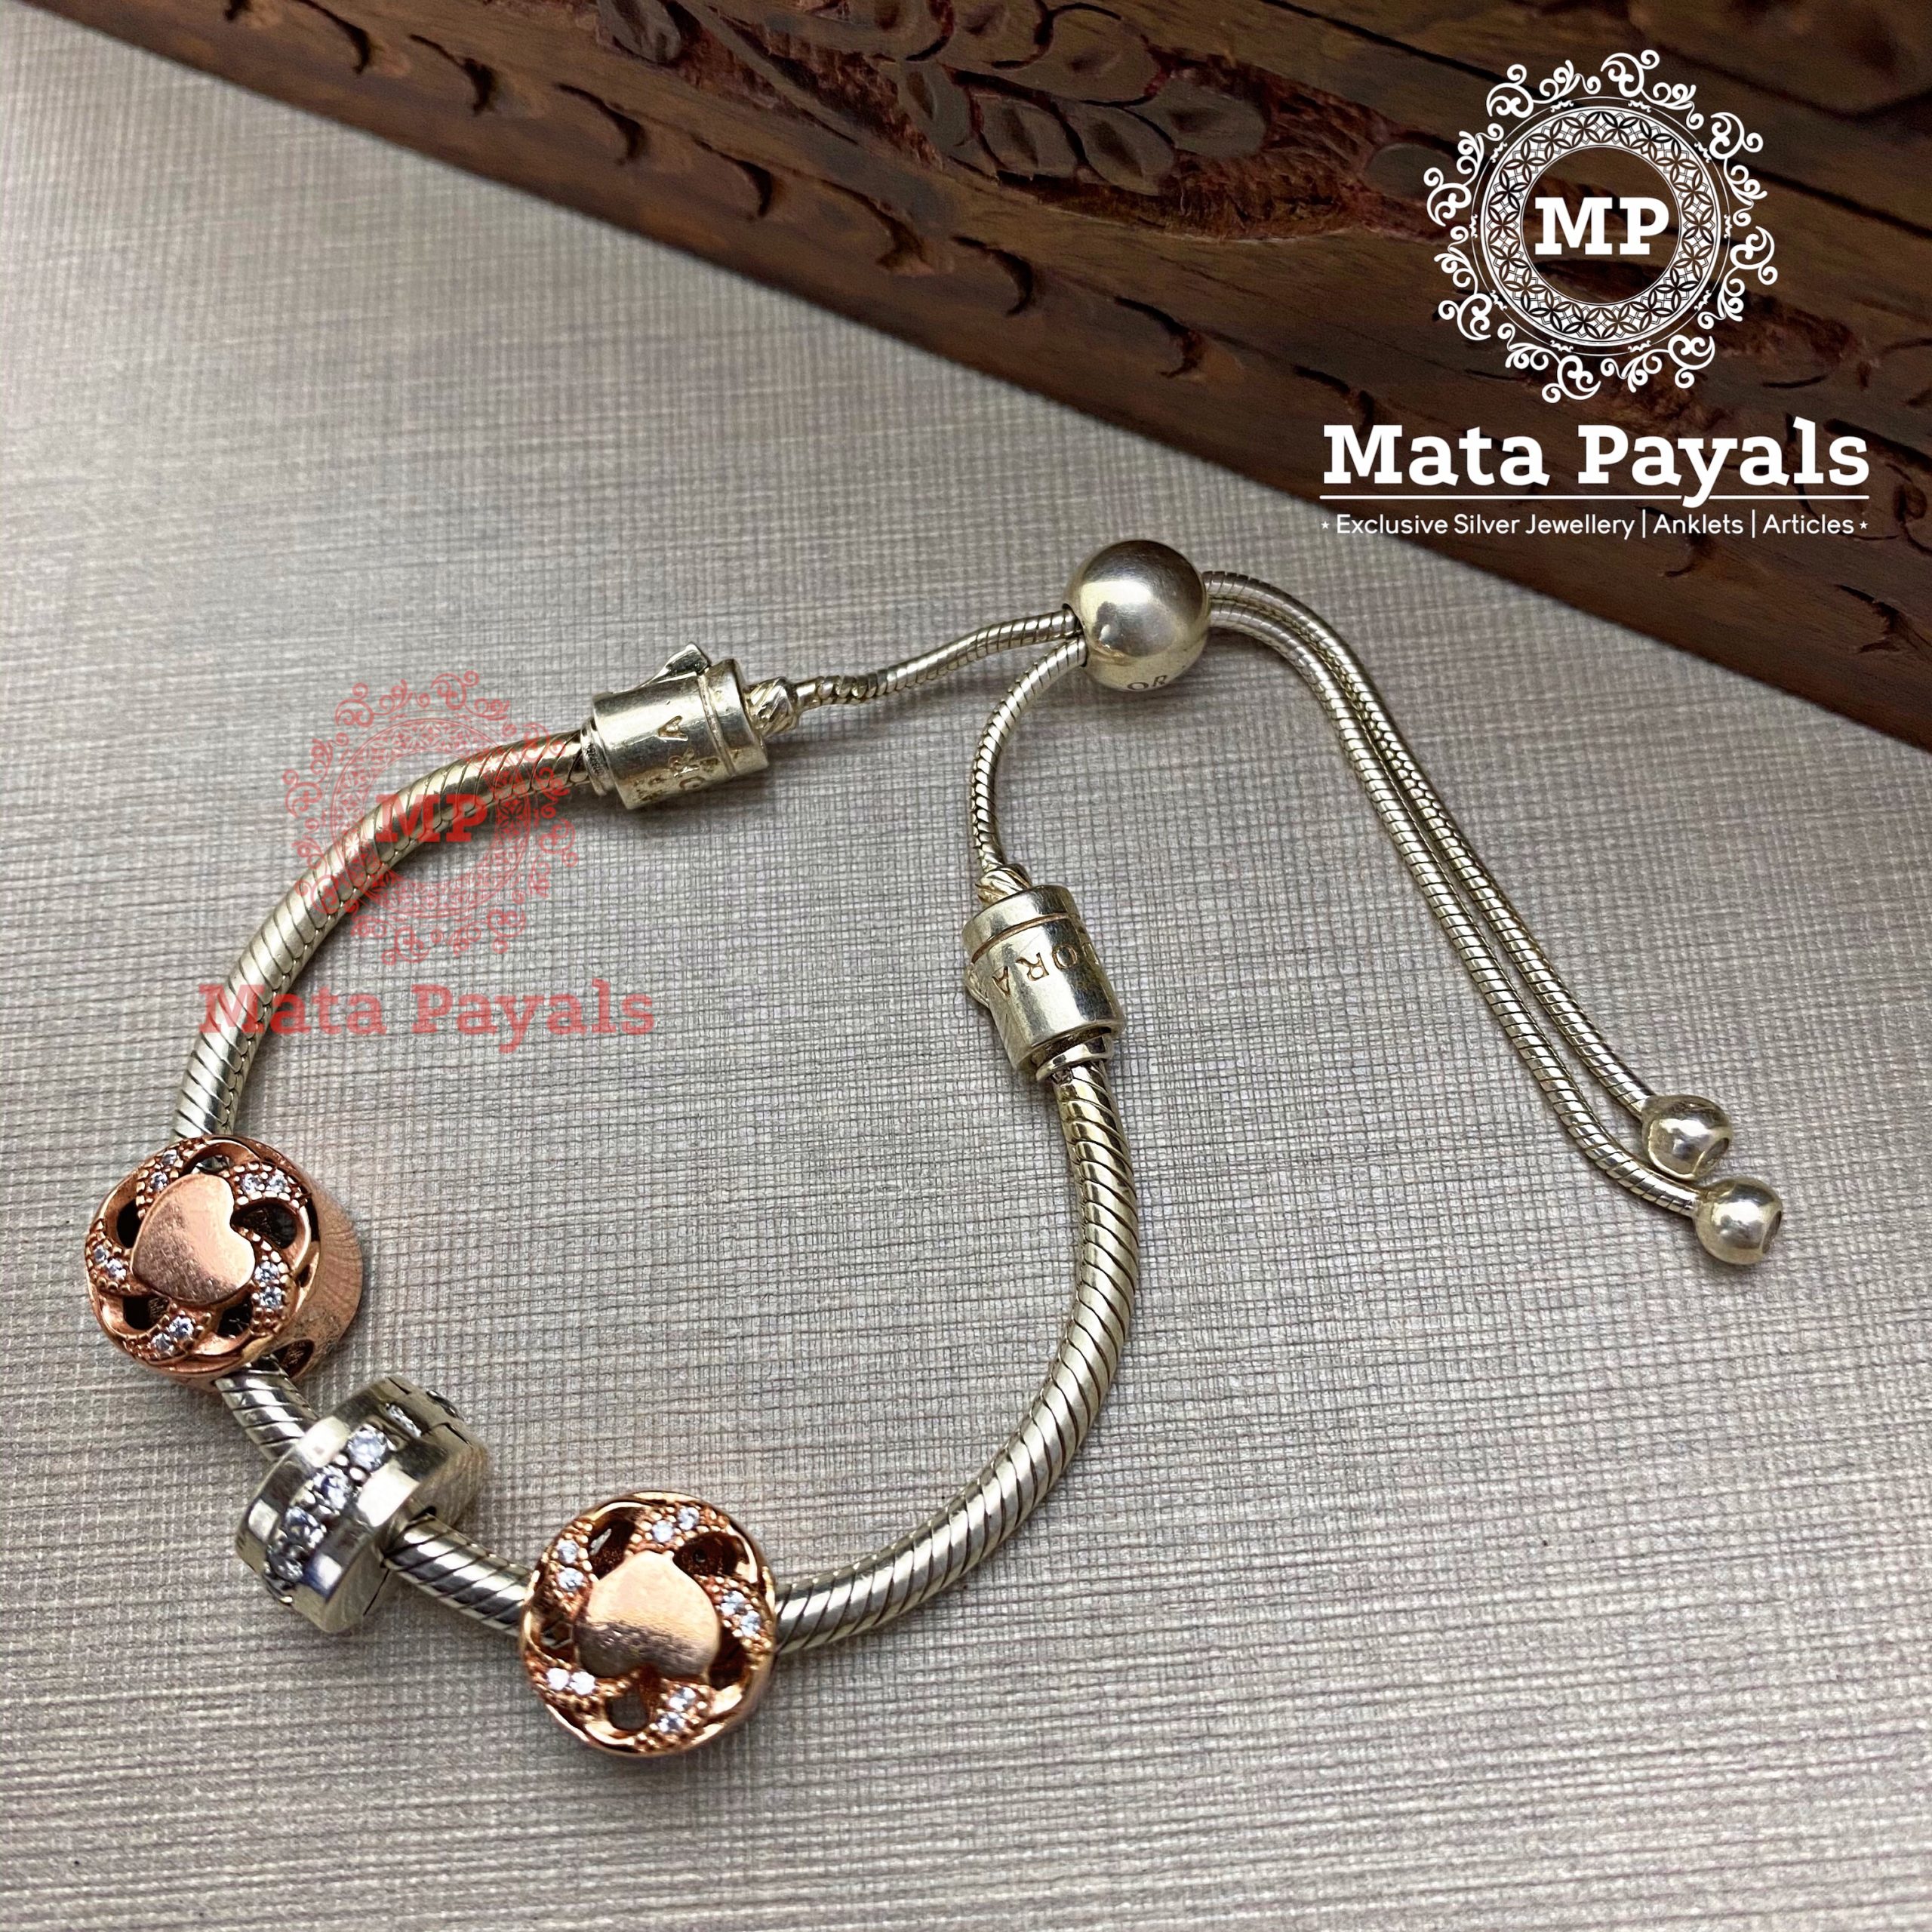 Pandora Openable Charm Bracelet